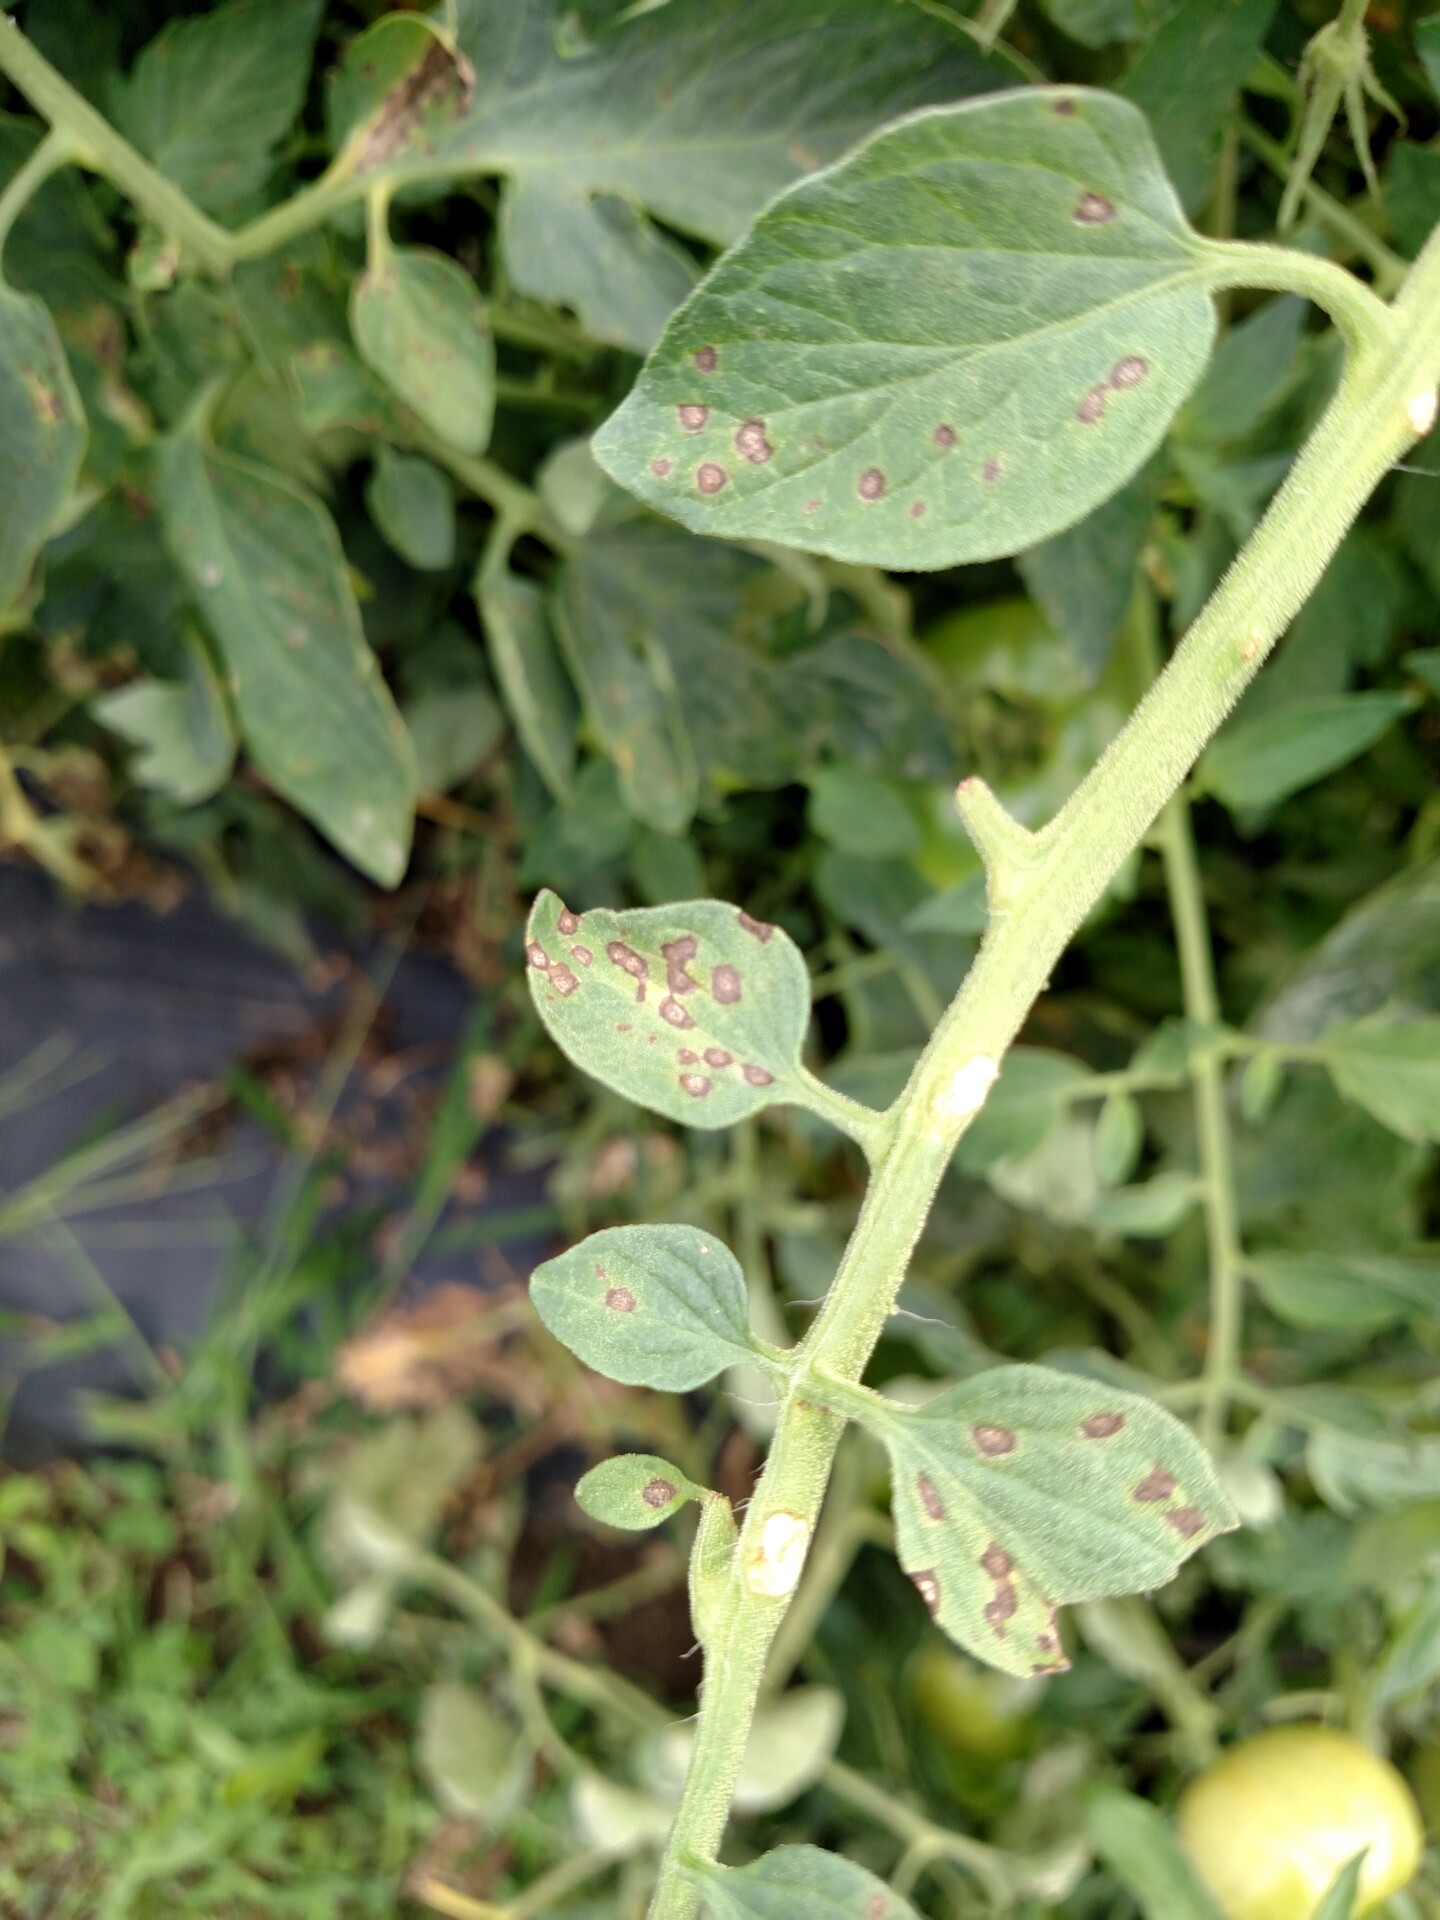 Lesions of Septoria leaf spot are often dark brown on the inside margin.